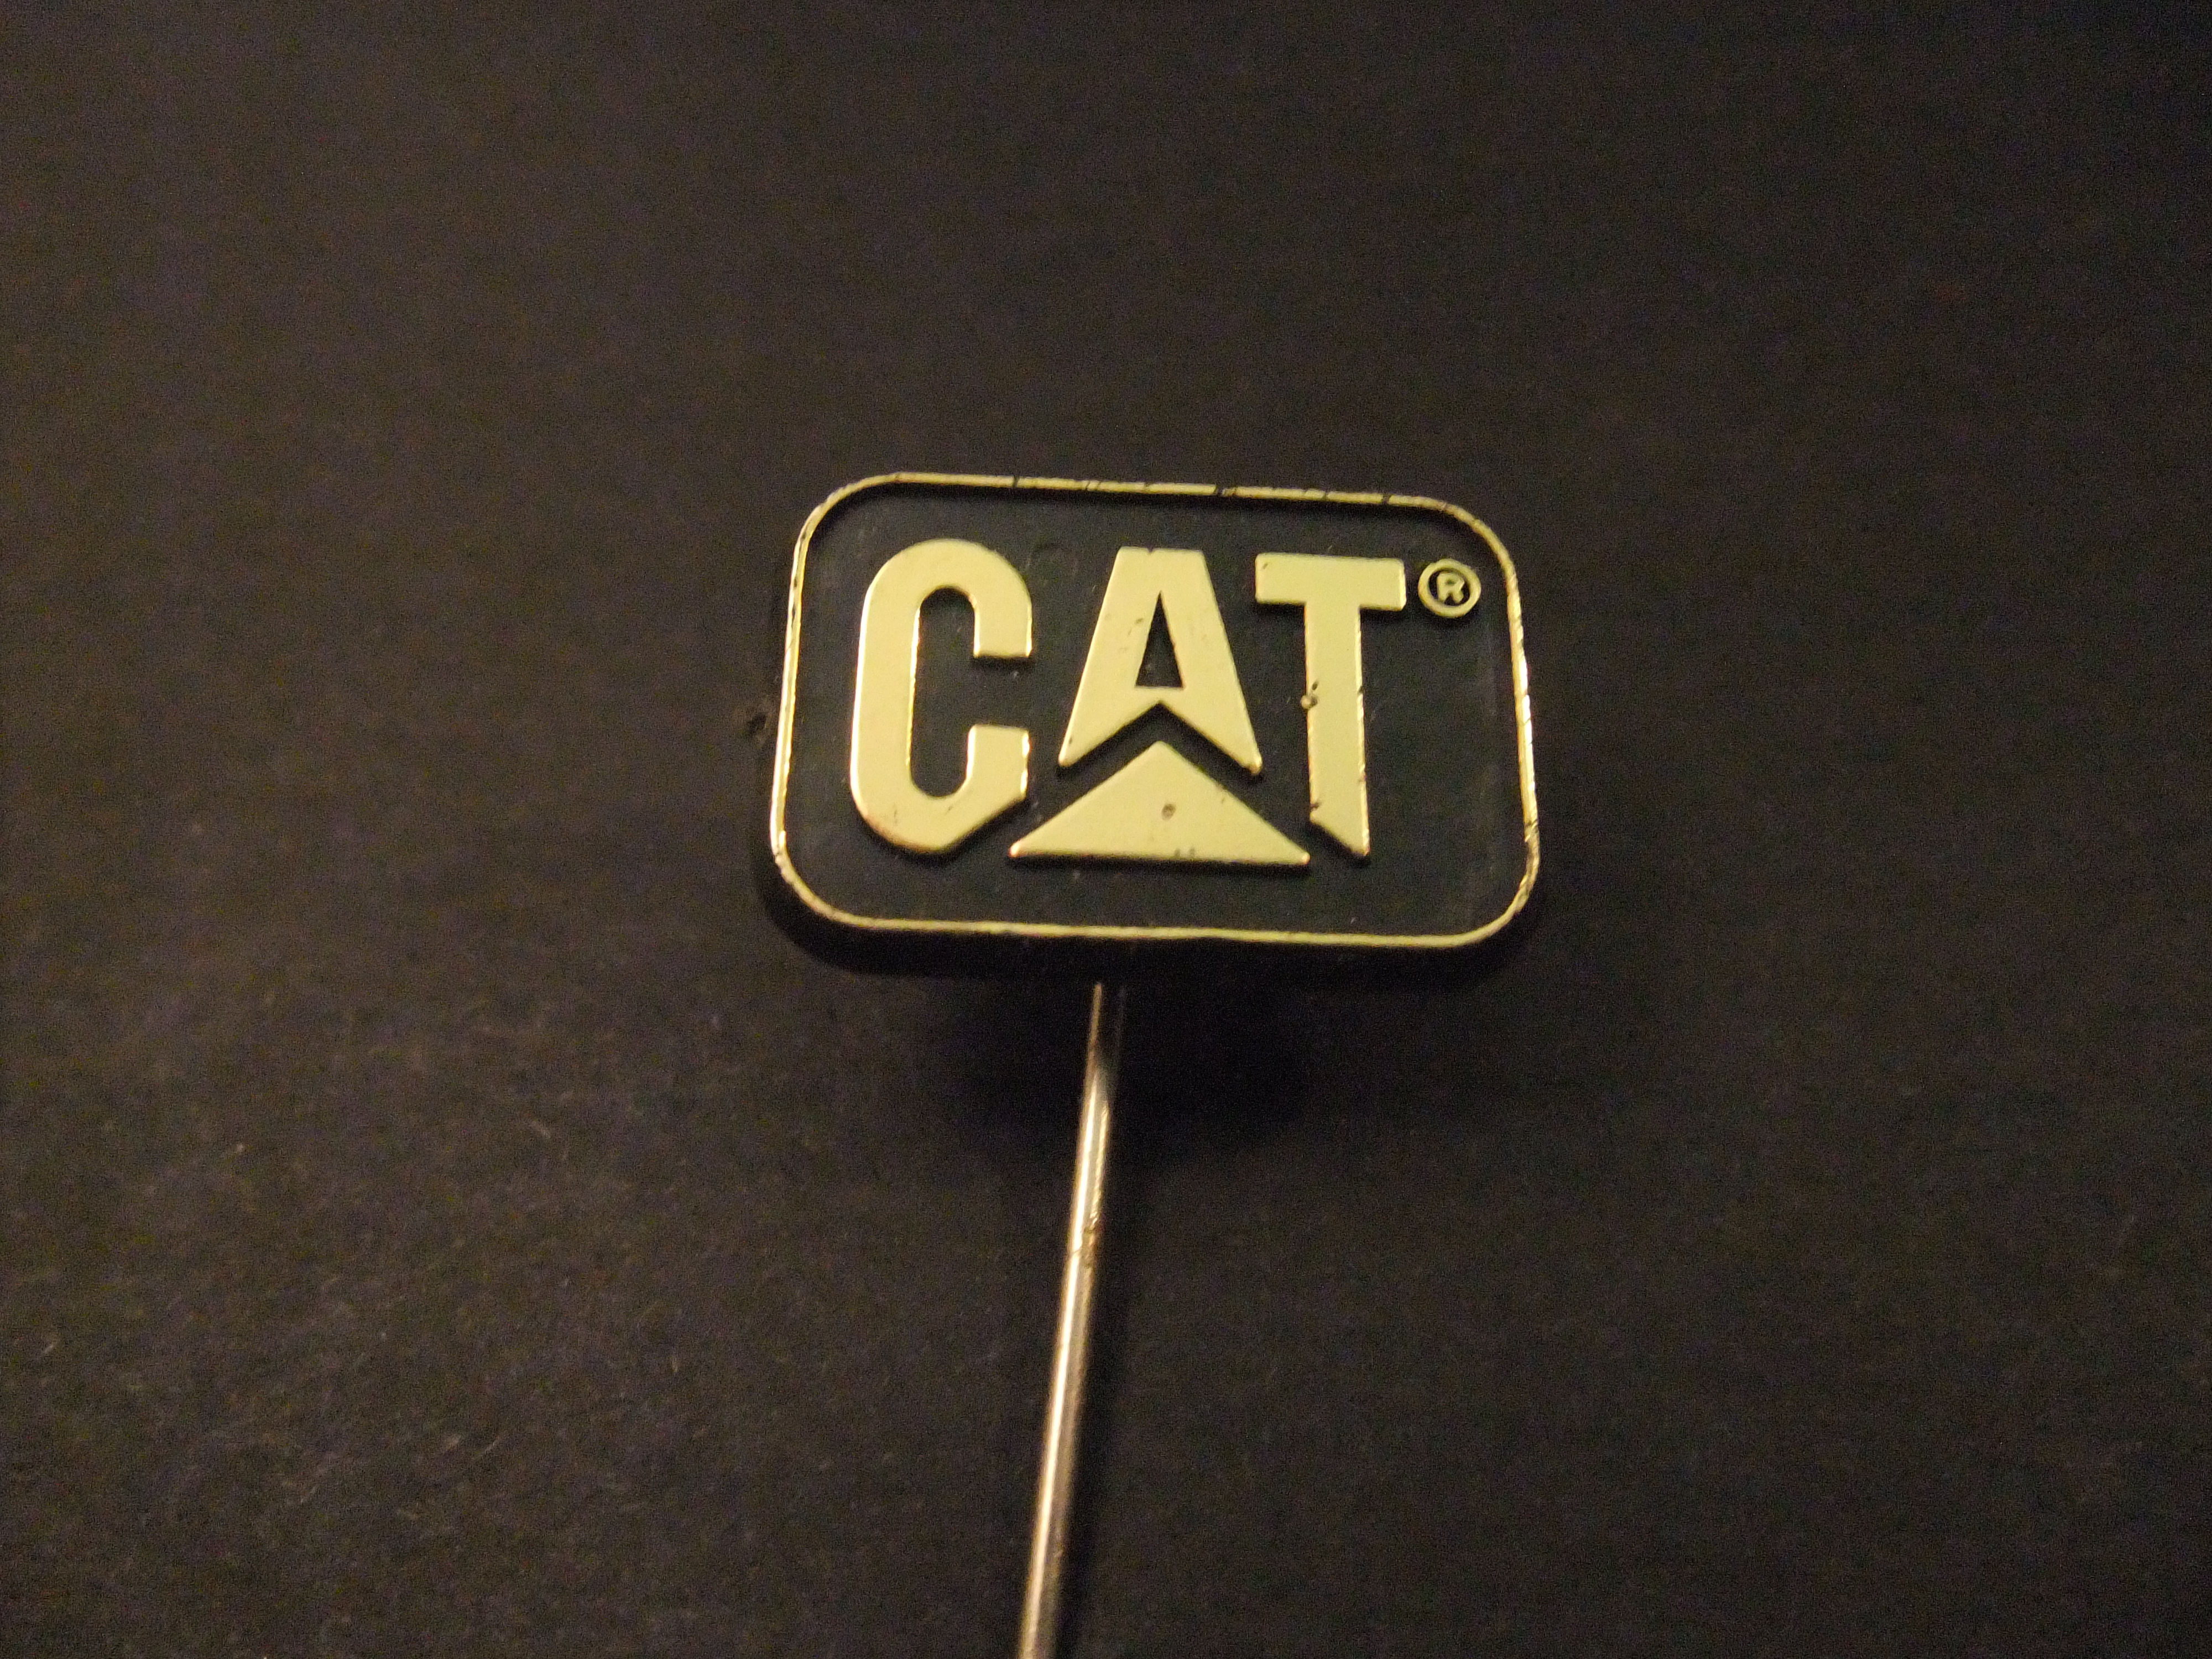 Cat Diesel Power ,zware machines logo (goudkleurige letters)